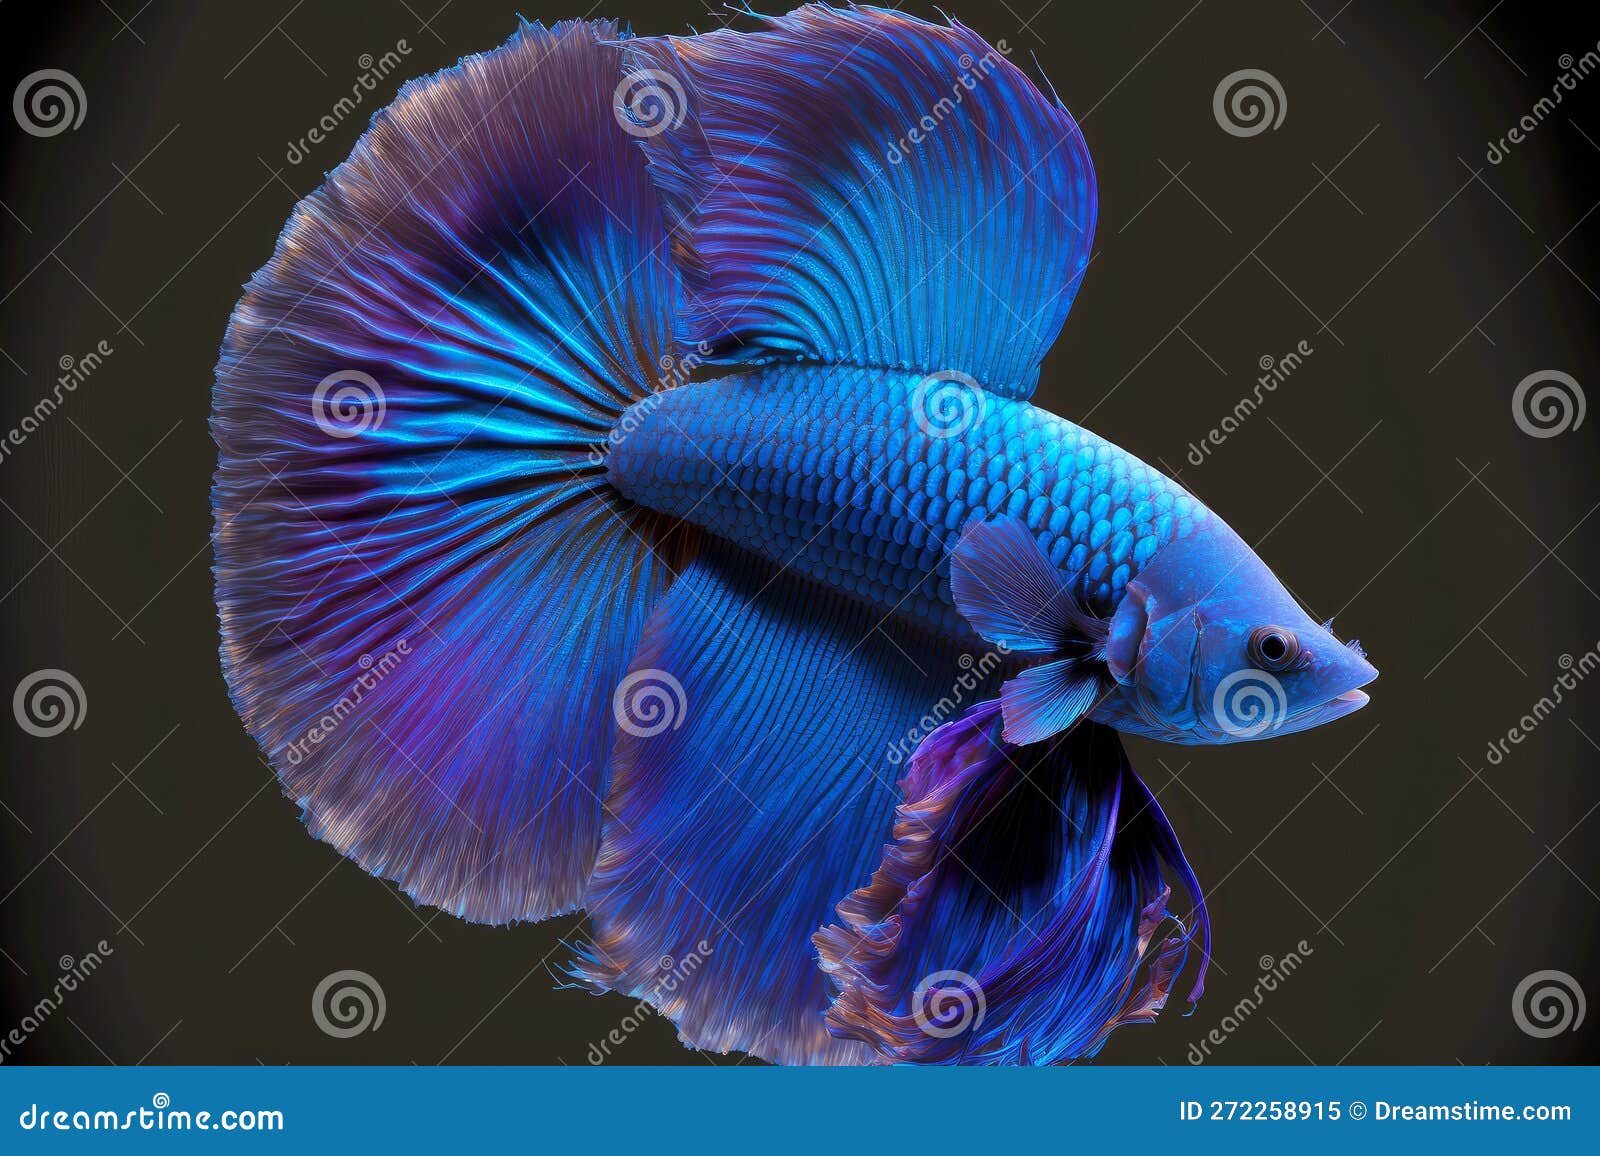 Bright Blue Purple Betta Fish with Fan-shaped Tail Stock Illustration -  Illustration of animal, betta: 272258915